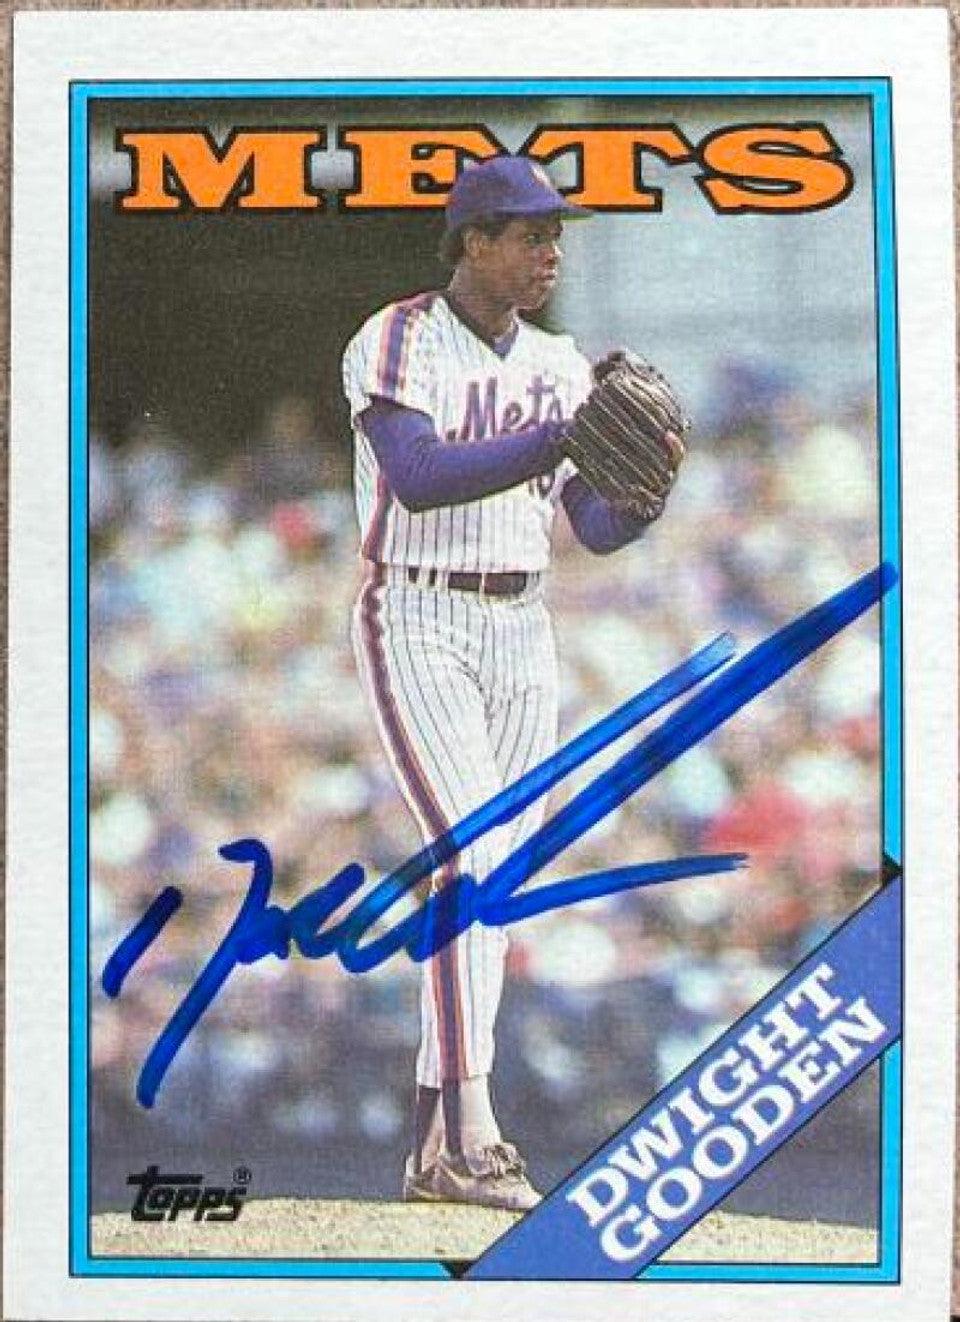 Dwight Gooden Signed 1988 Topps Baseball Card - New York Mets #480 - PastPros